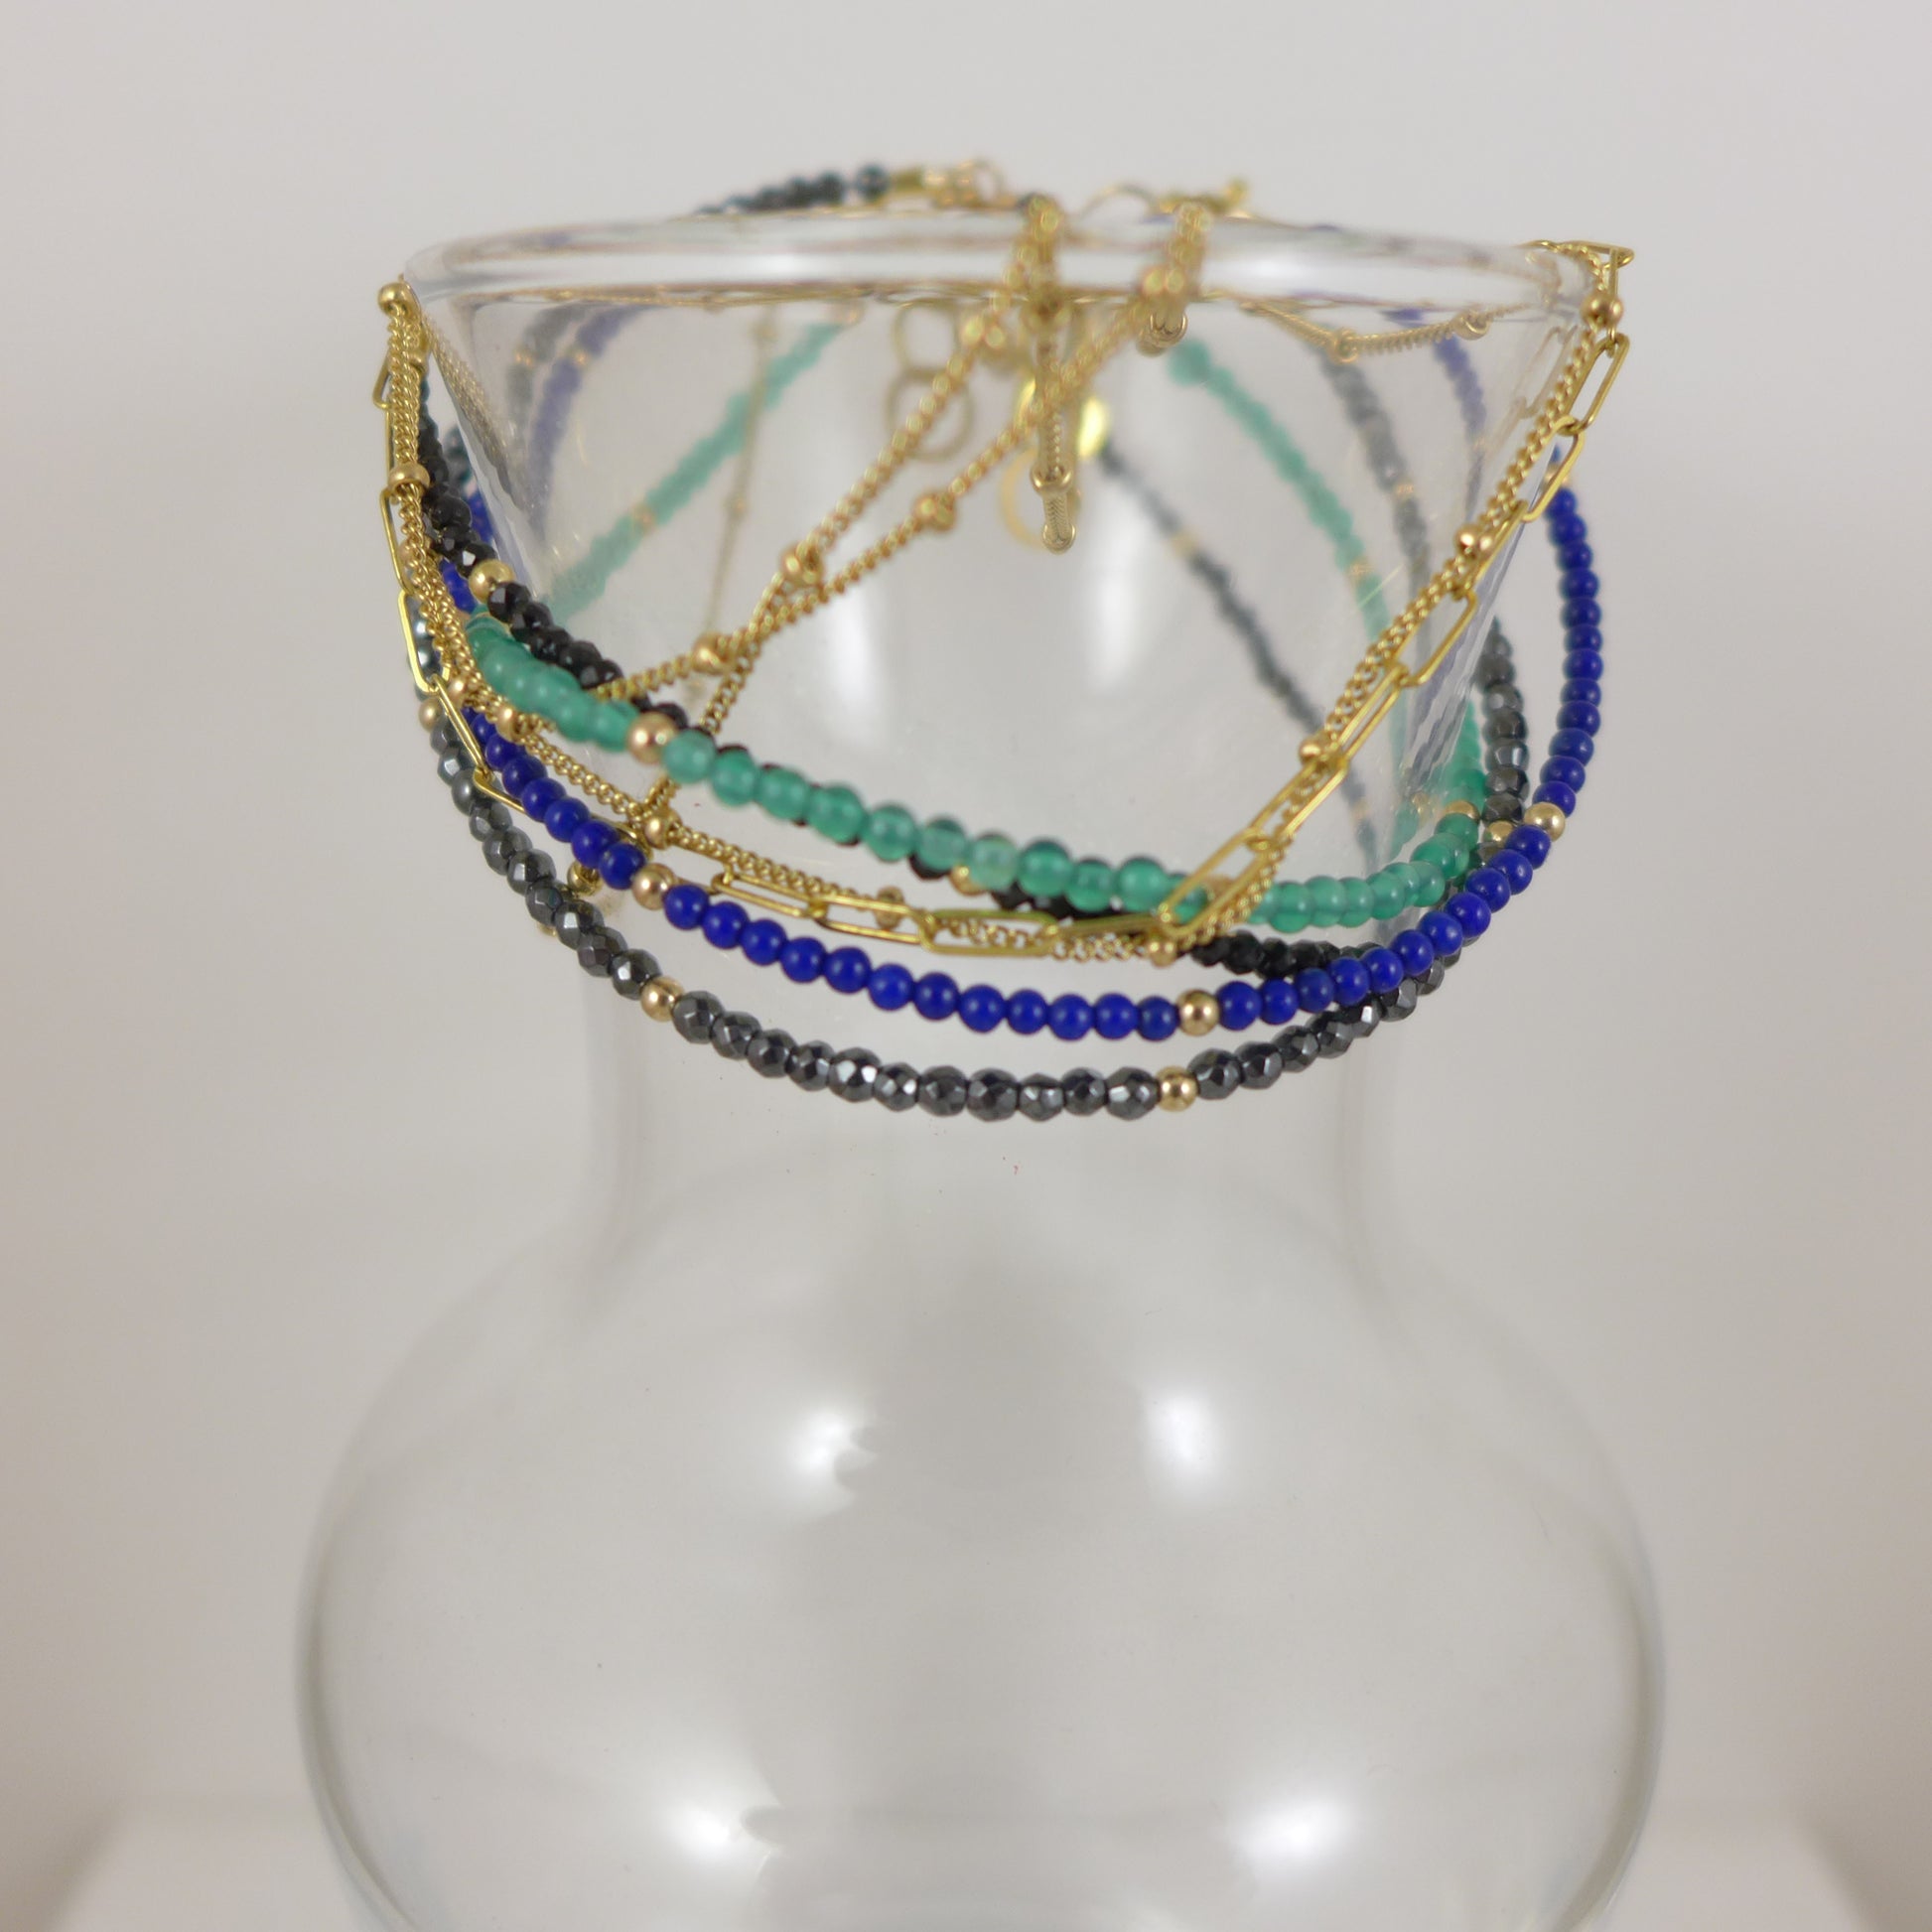 Green Agate and Gold Filled Bracelet - Karen Morrison Jewellery